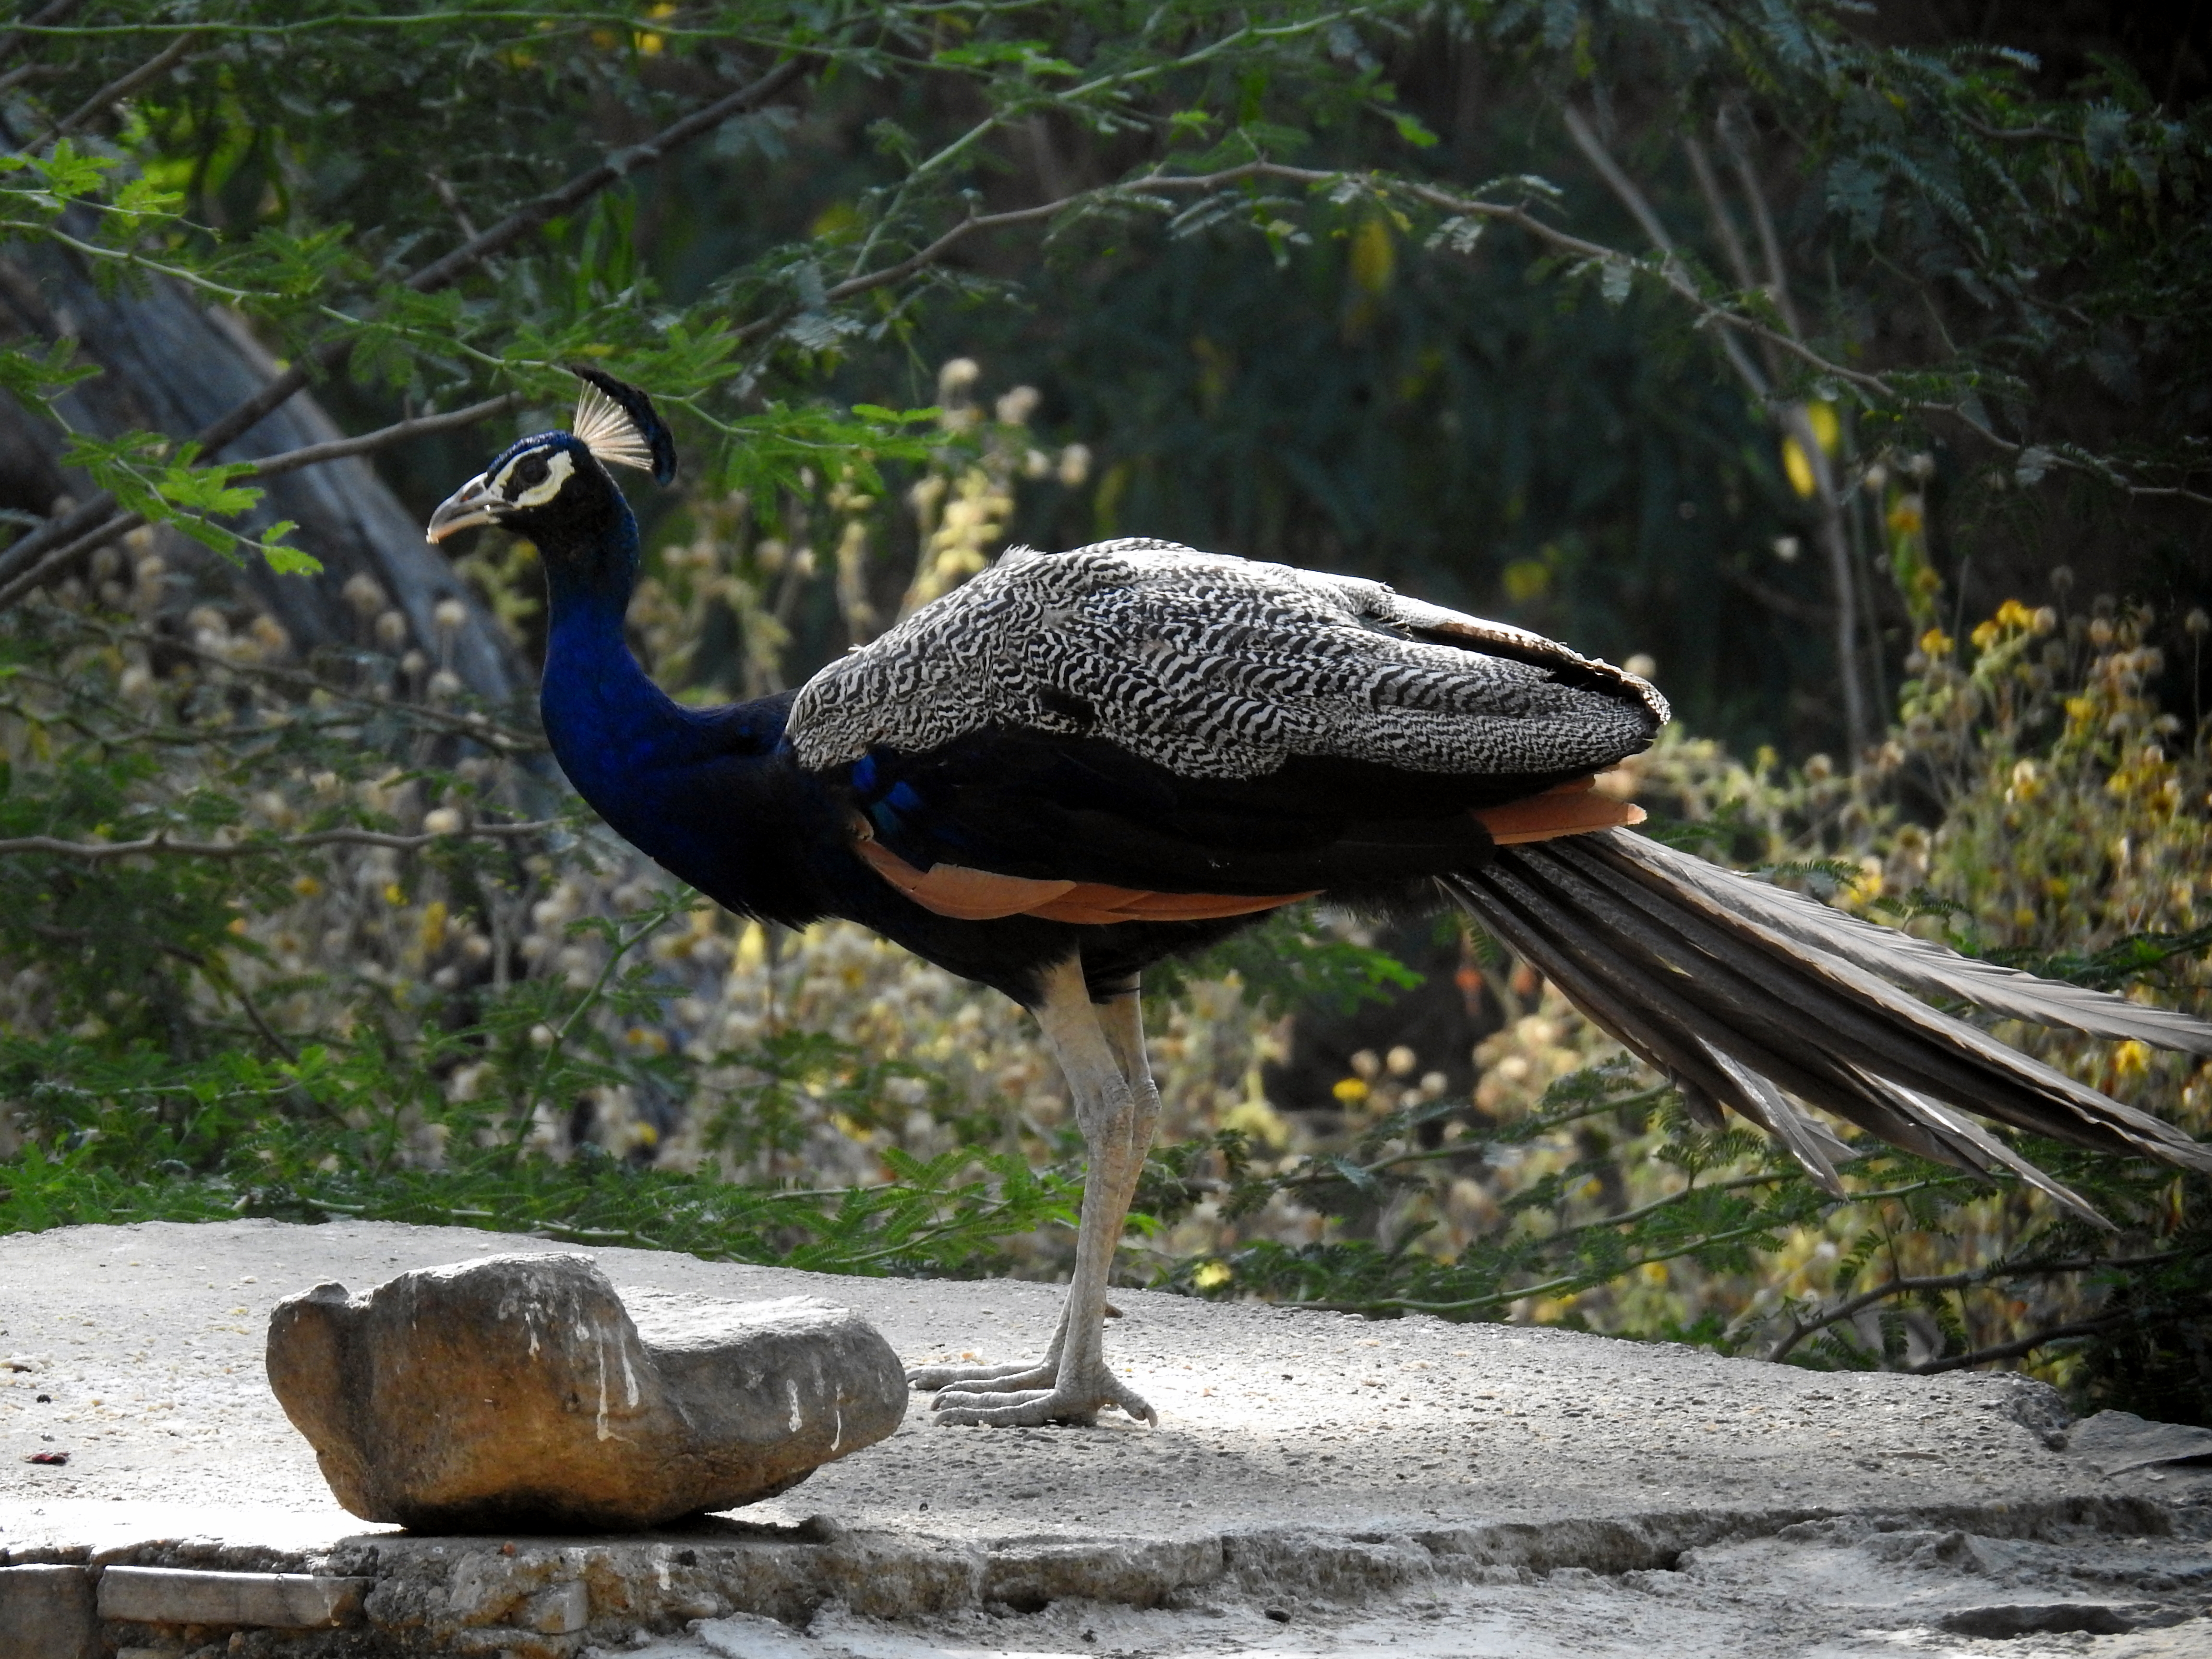 A peacock in Jaipur